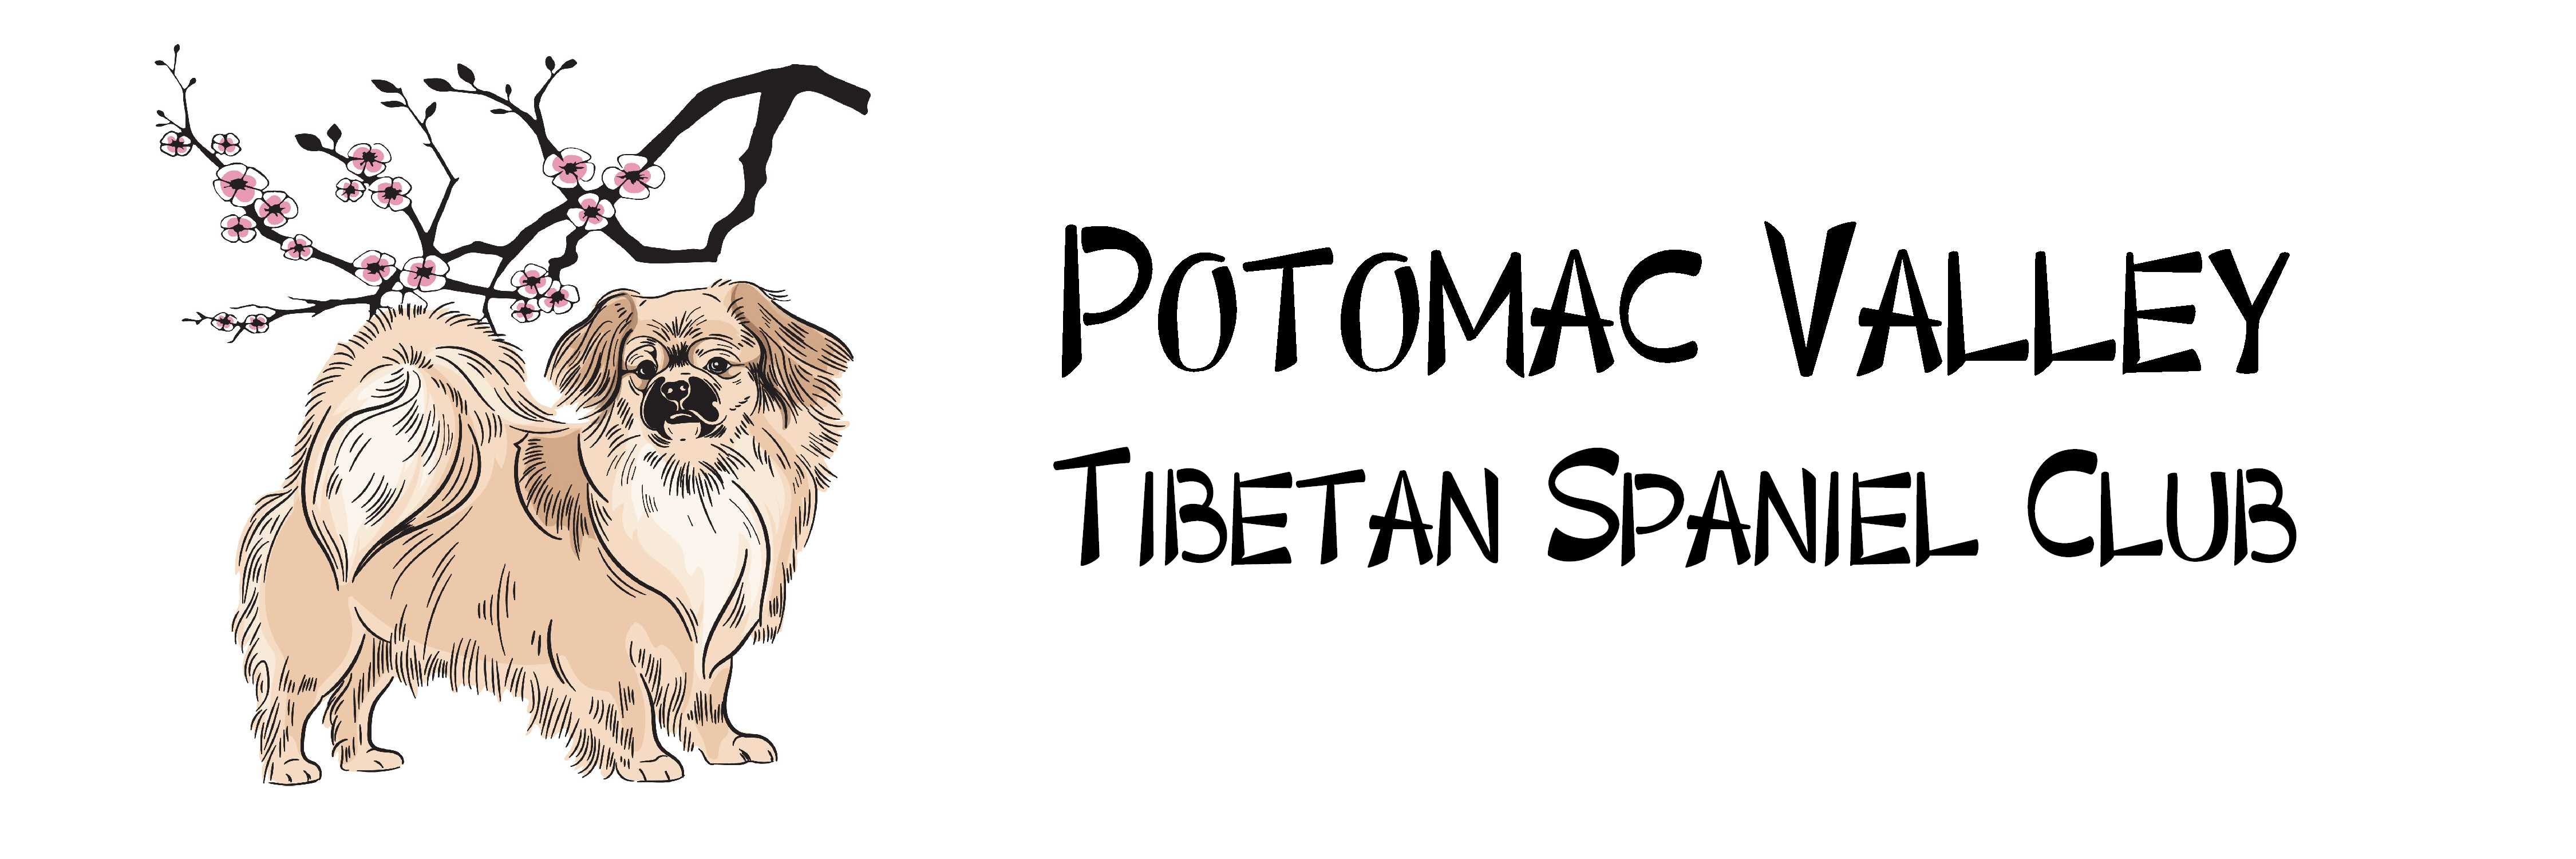 Potomac Valley Tibetan Spaniel Club